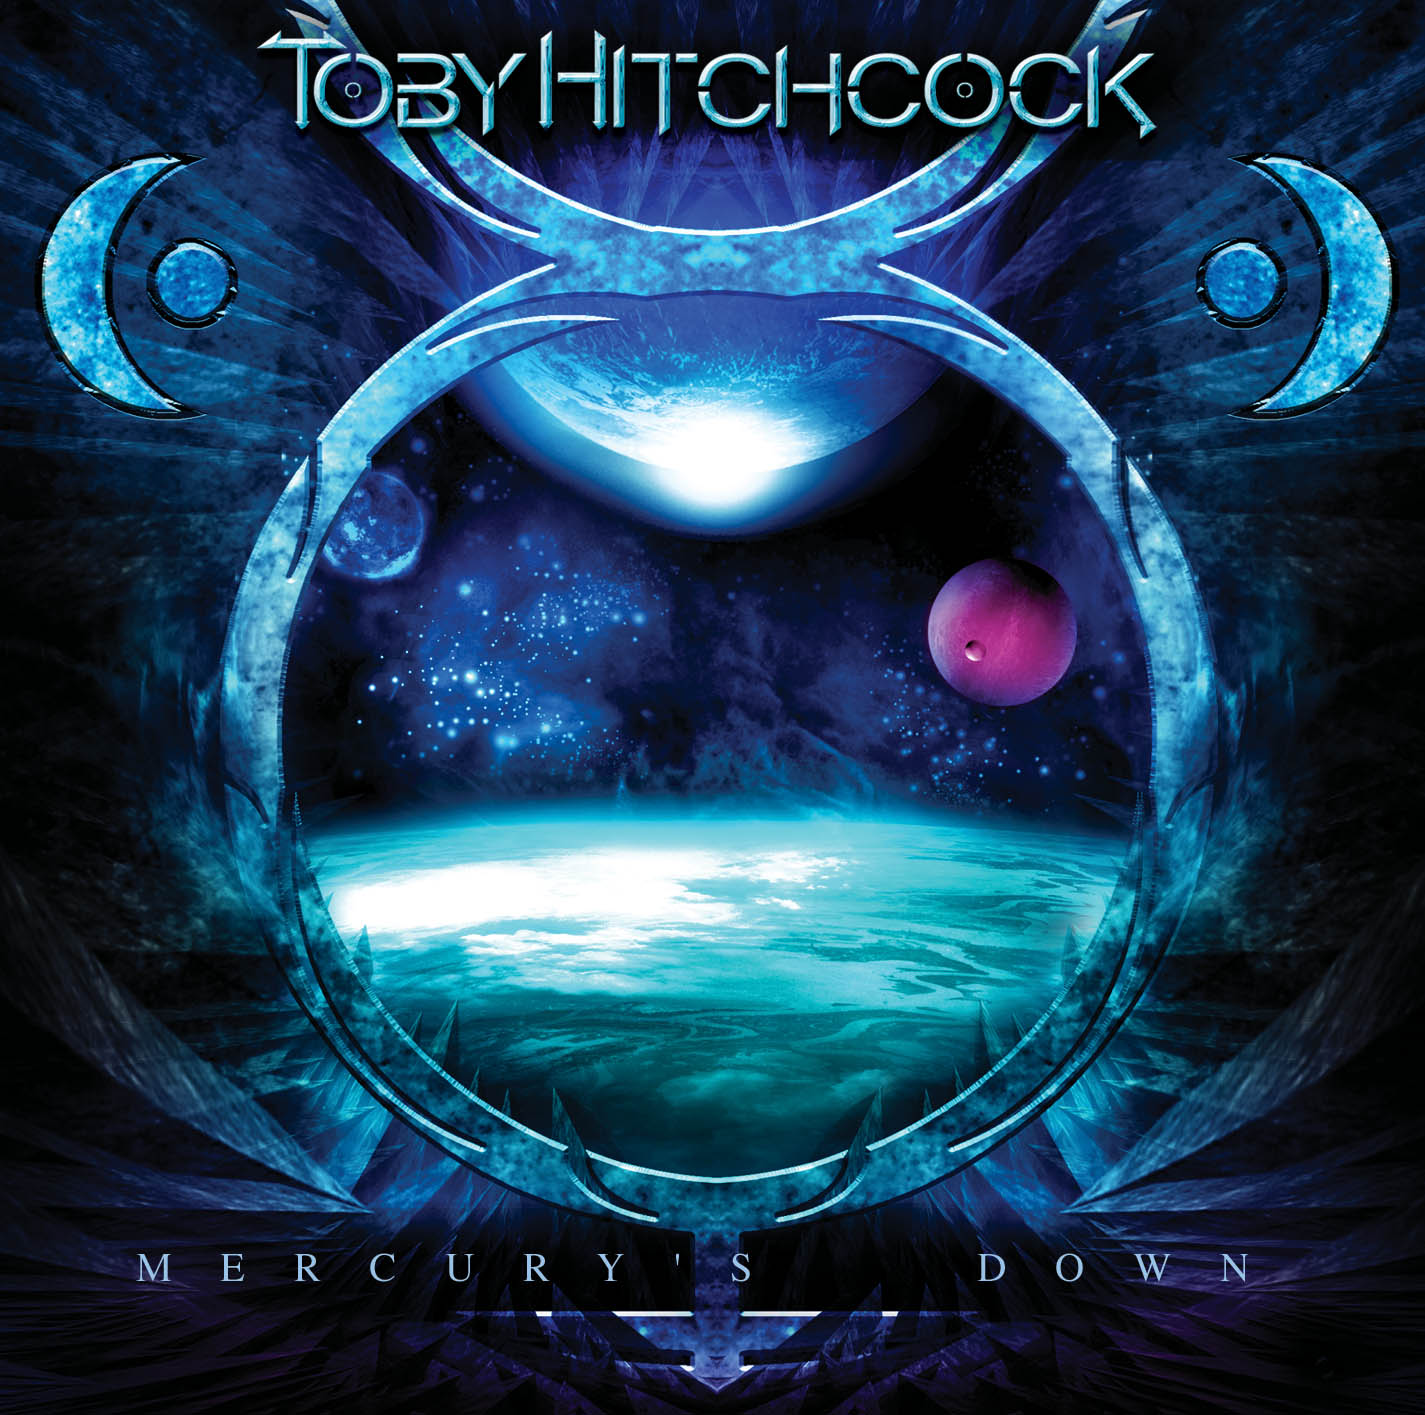 Rock Eyez Webzine: Toby Hitchcock - Mercuryaposs Down - CD Review